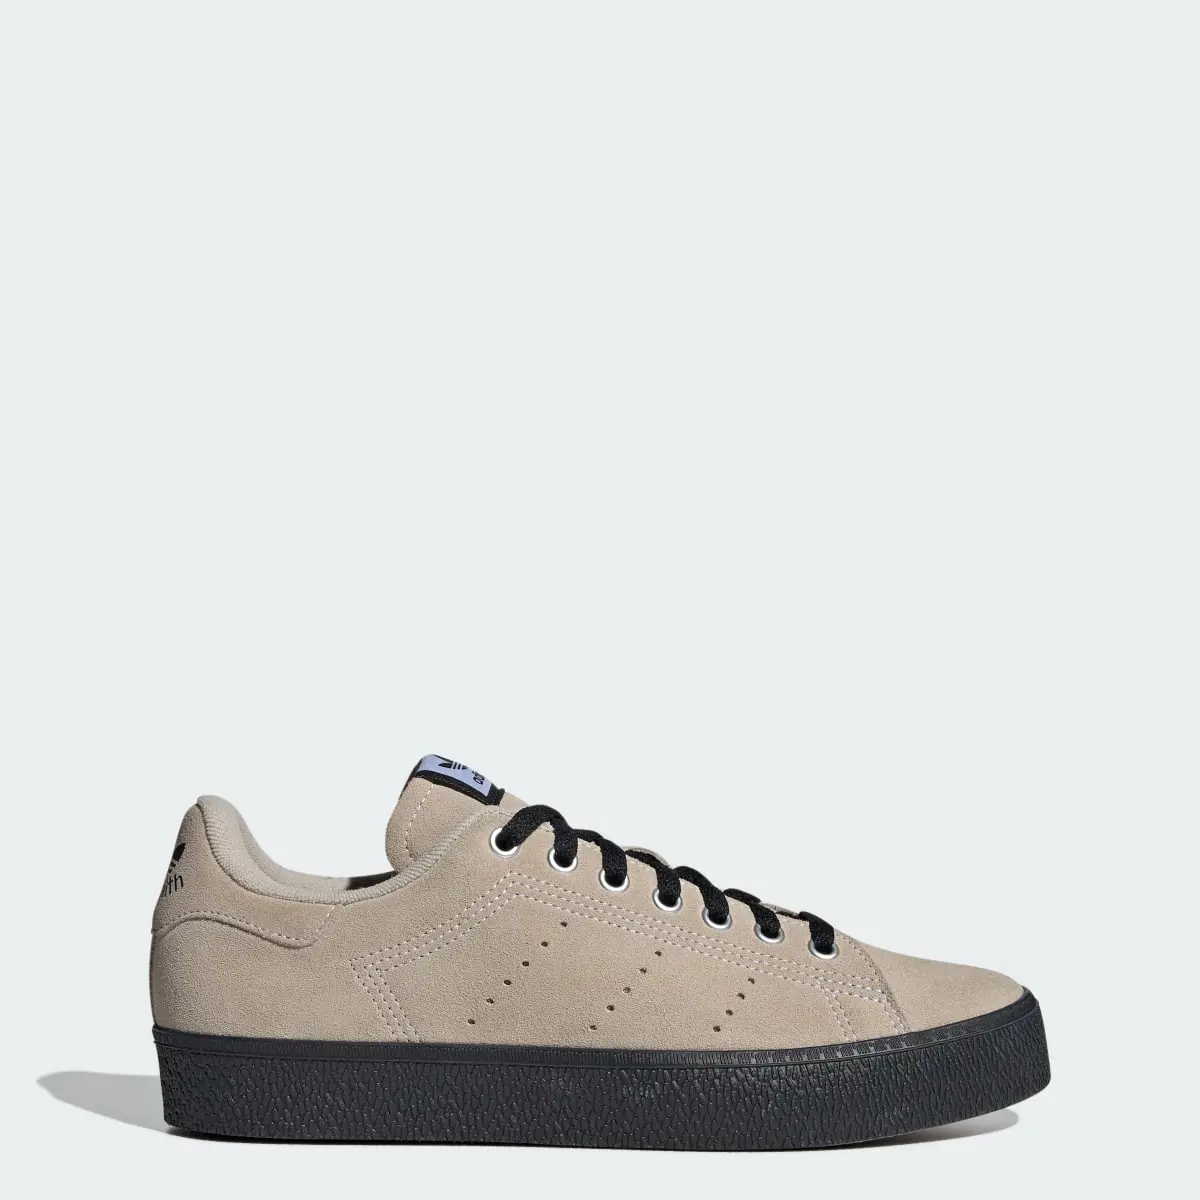 Adidas Stan Smith CS Shoes. 1